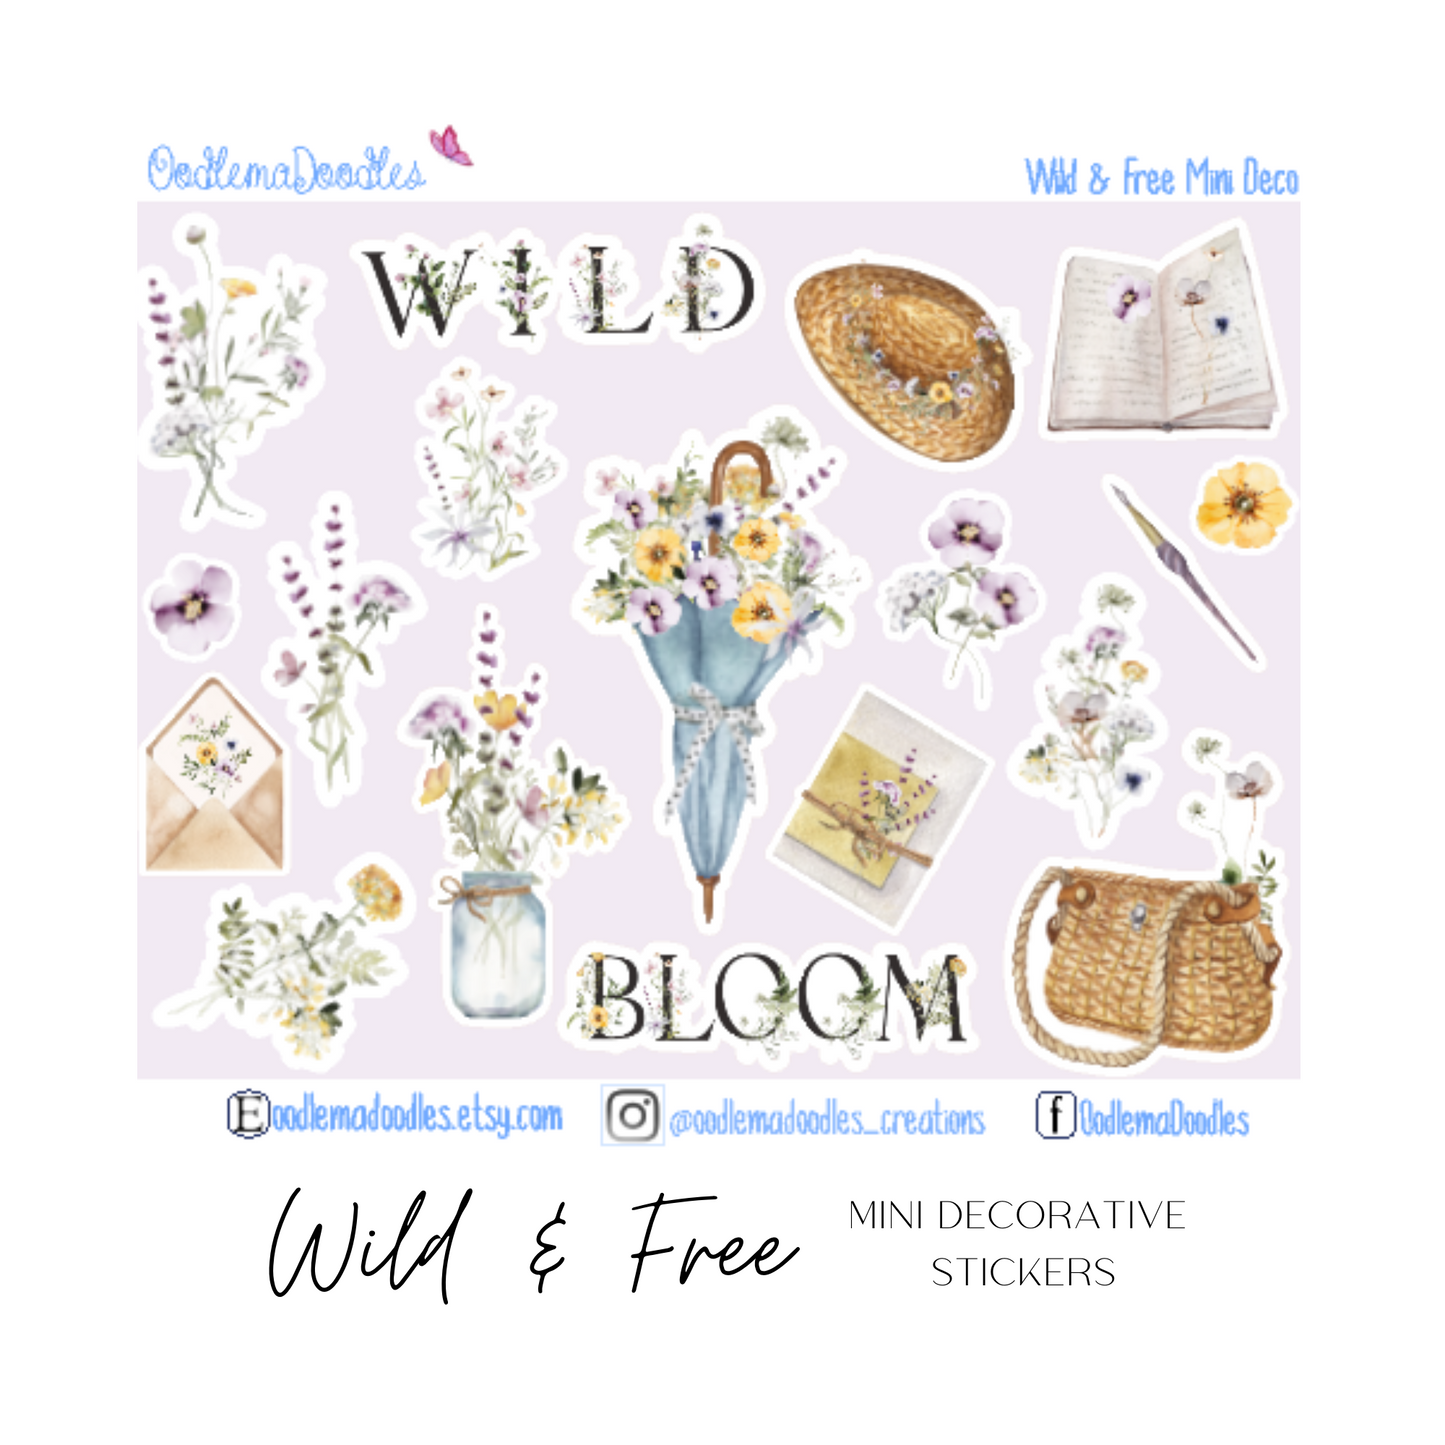 Wild & Free Mini Decorative Stickers